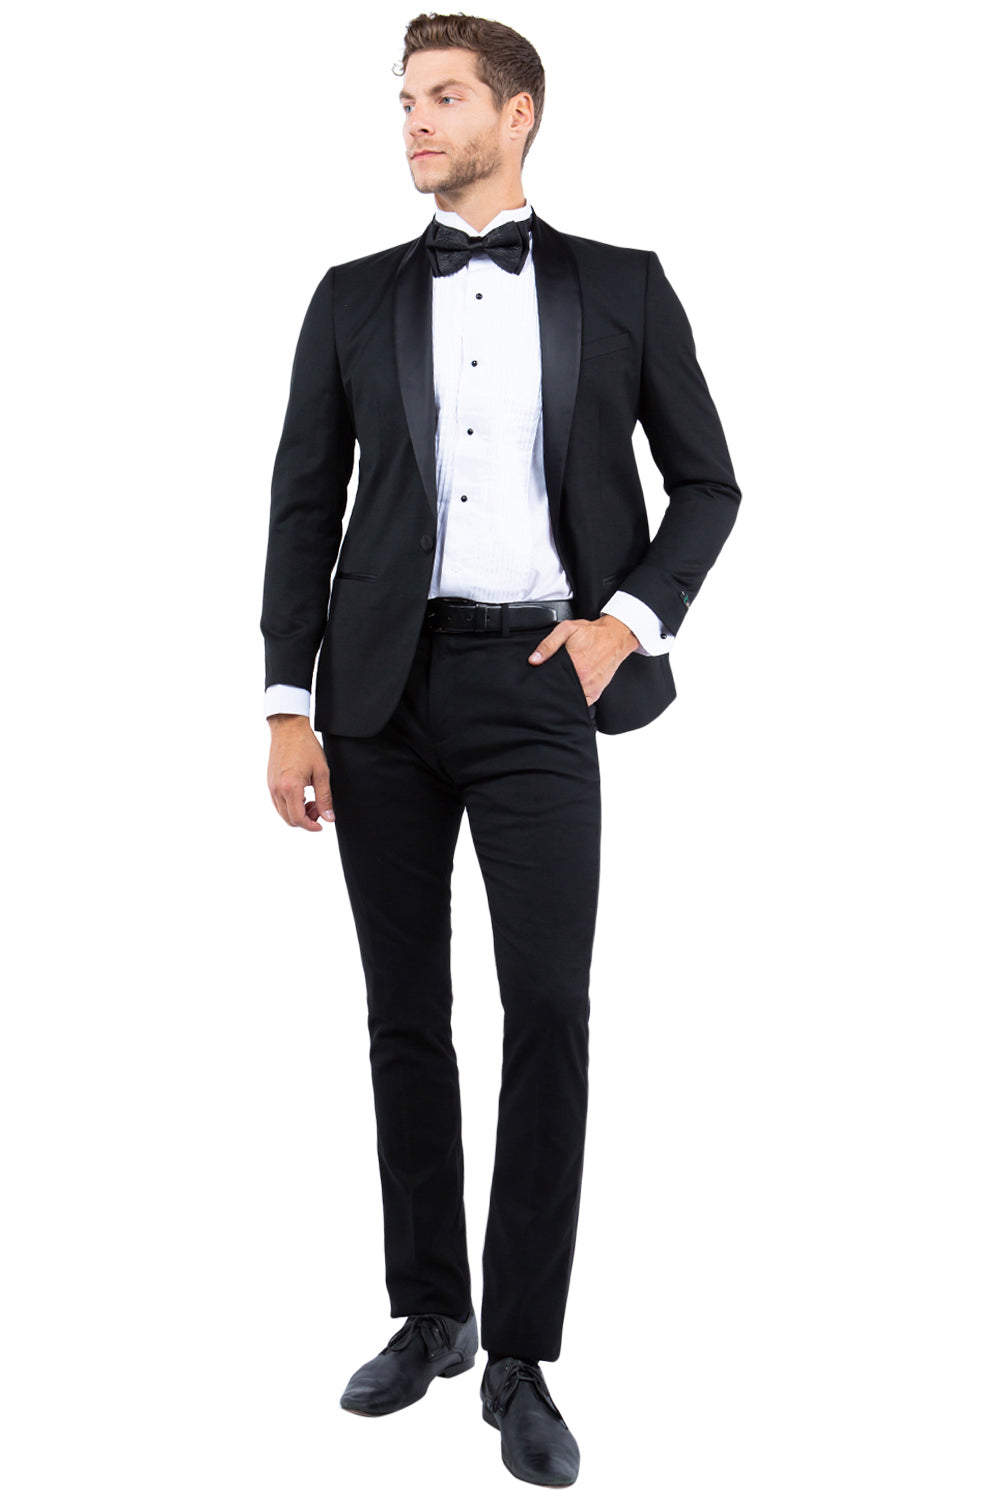 Black Zegarie Shawl Collar Tuxedo Jacket For Men MJT366-01